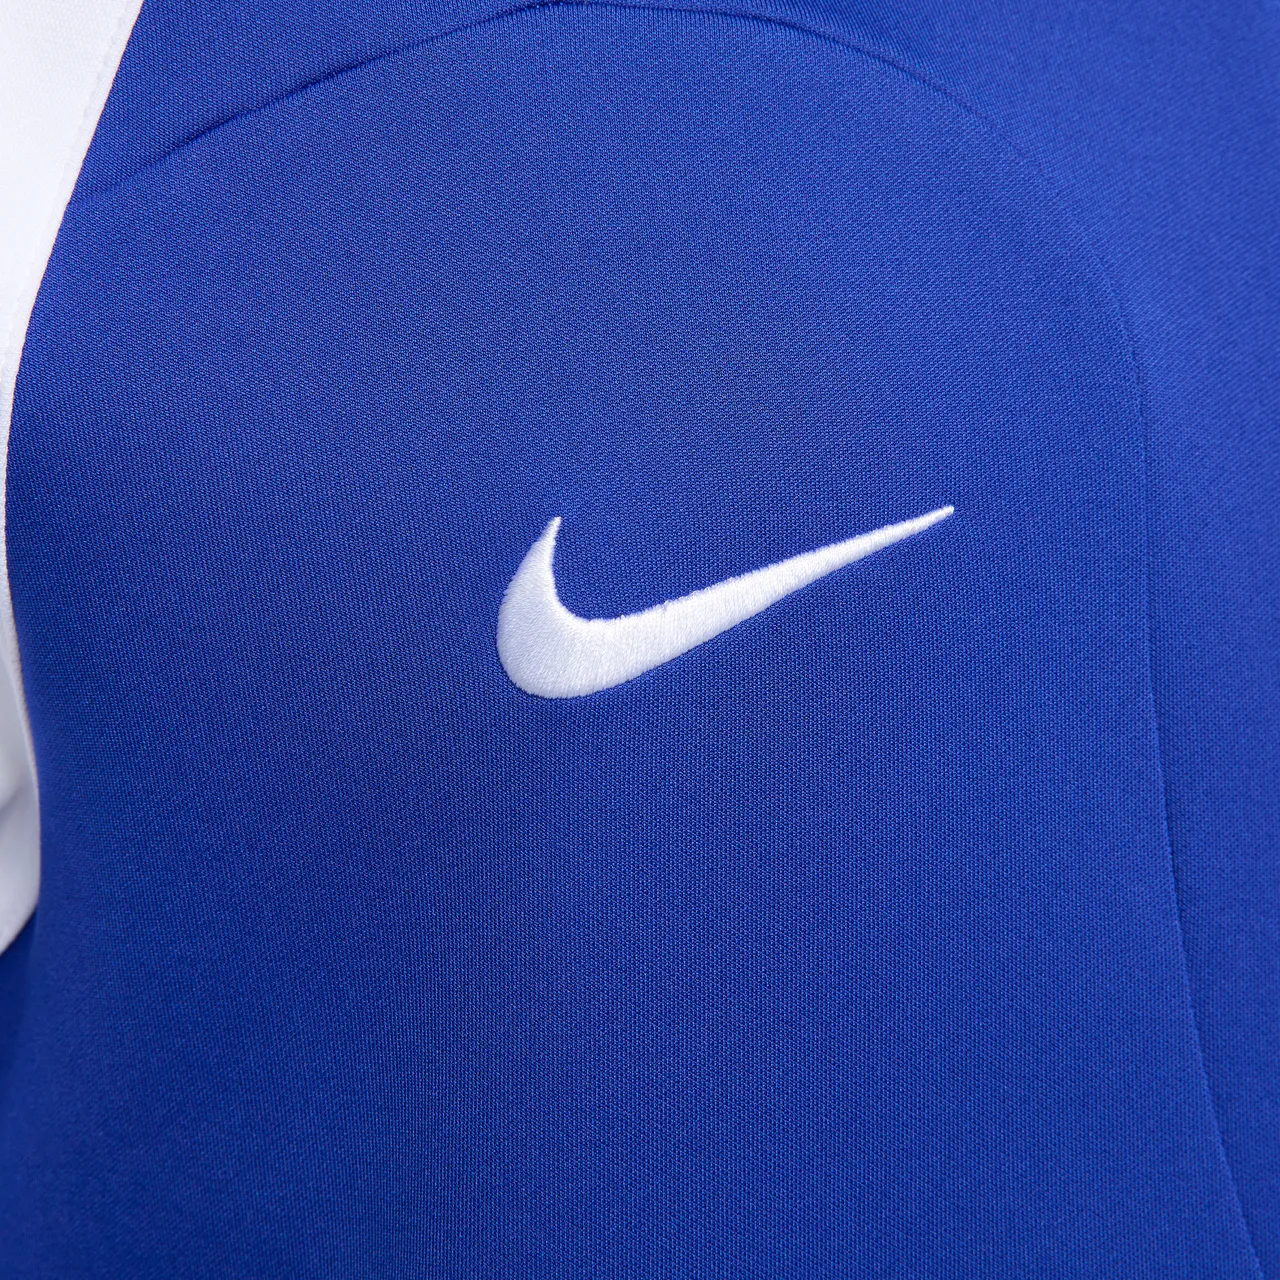 Atlético Madrid Academy Pro Men's Nike Full-Zip Knit Football Jacket - Blue - Polyester